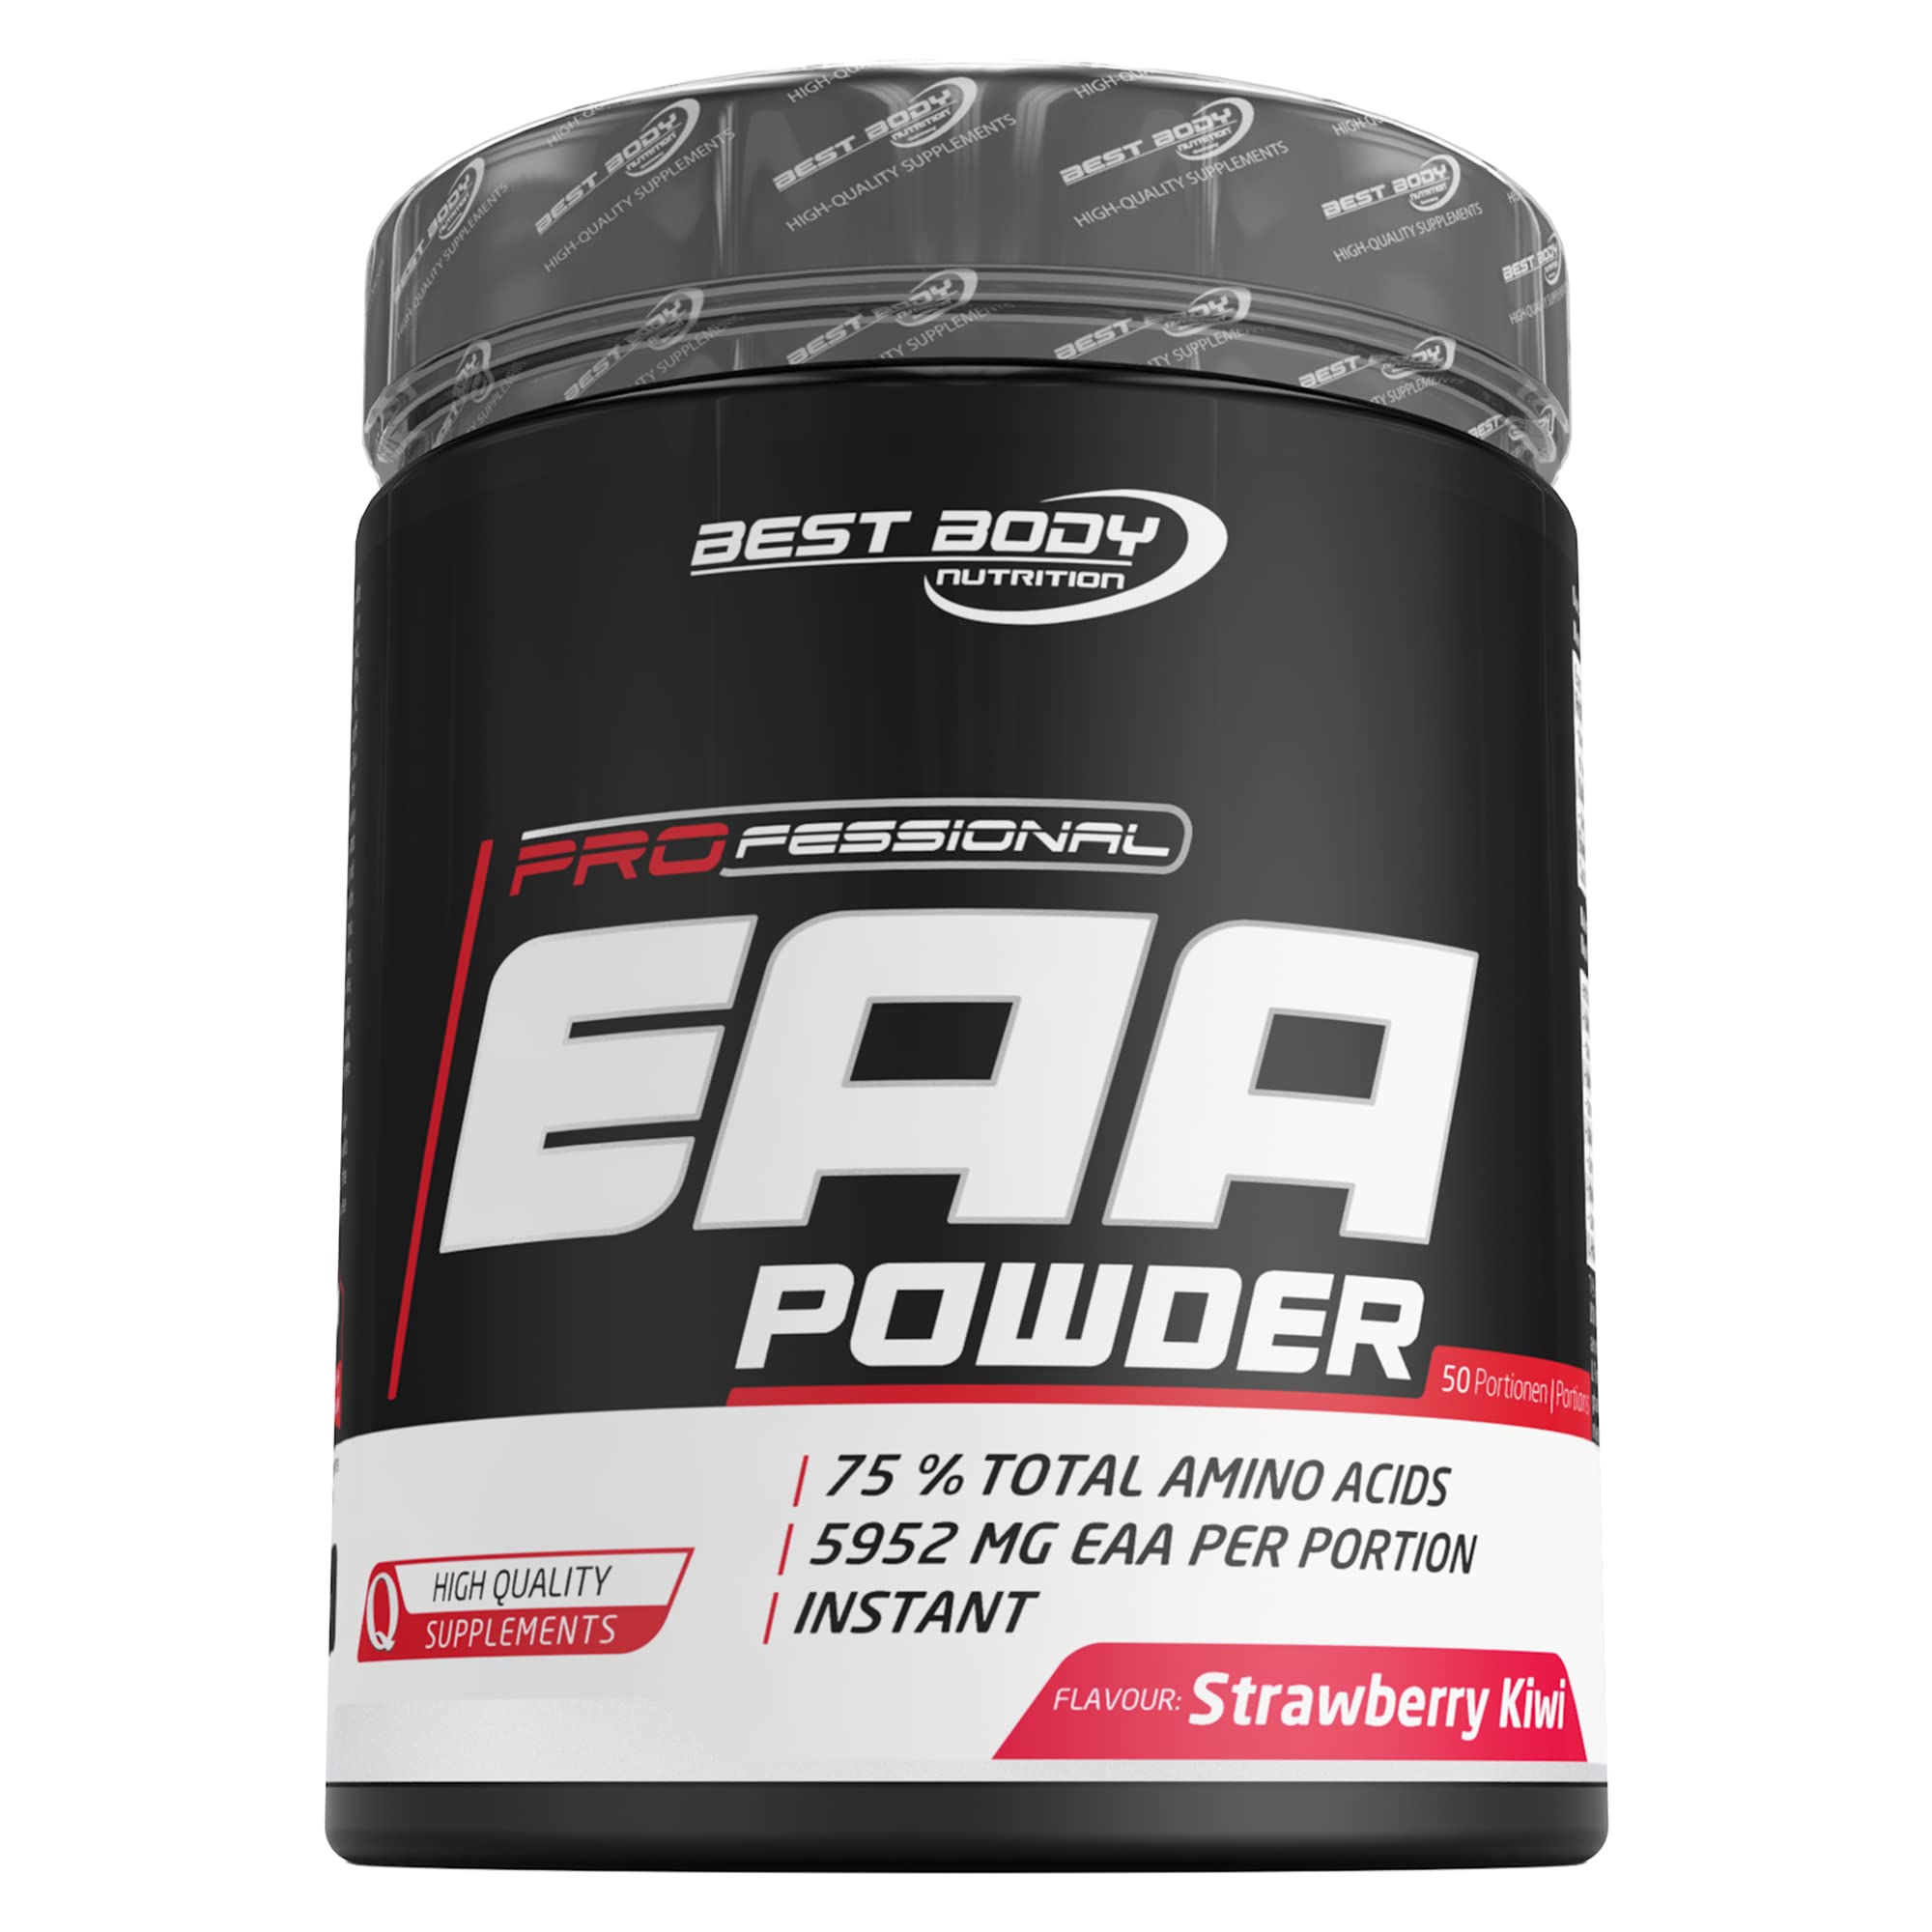 Best Body Nutrition Professional EAA Powder Strawberry Kiwi, 5952 mg EAA pro Portion, 450 g